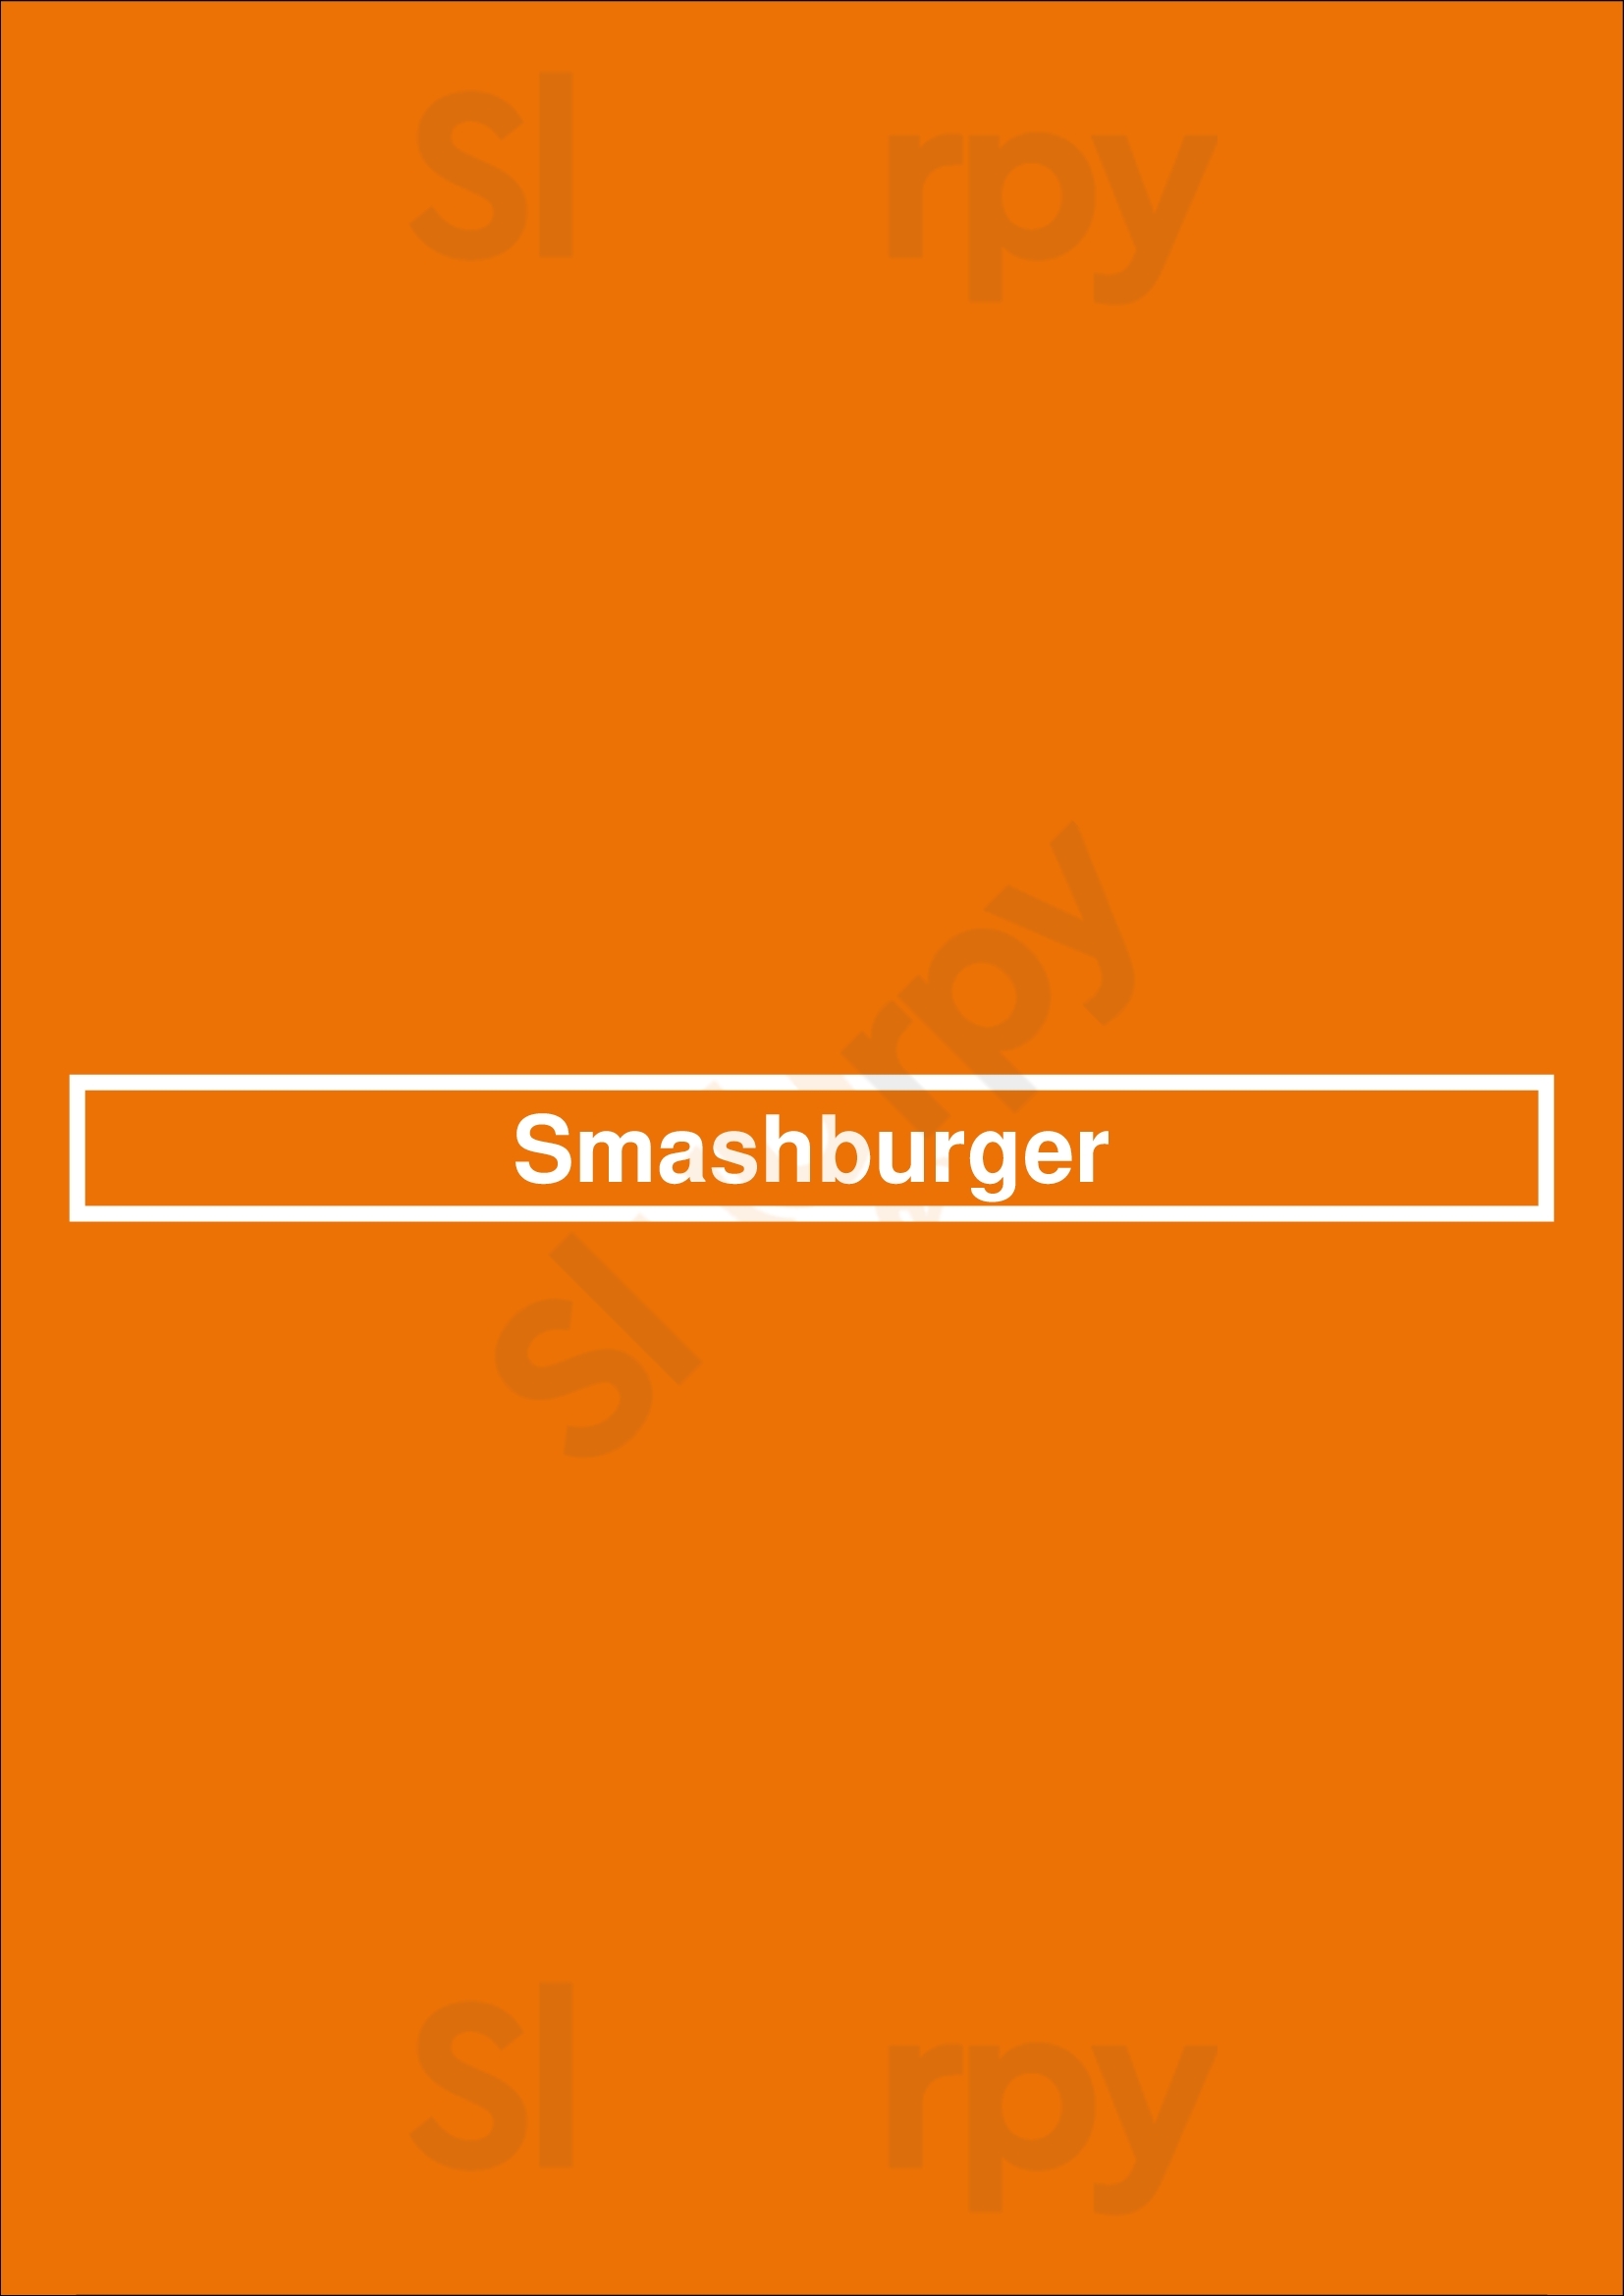 Smashburger Tucson Menu - 1